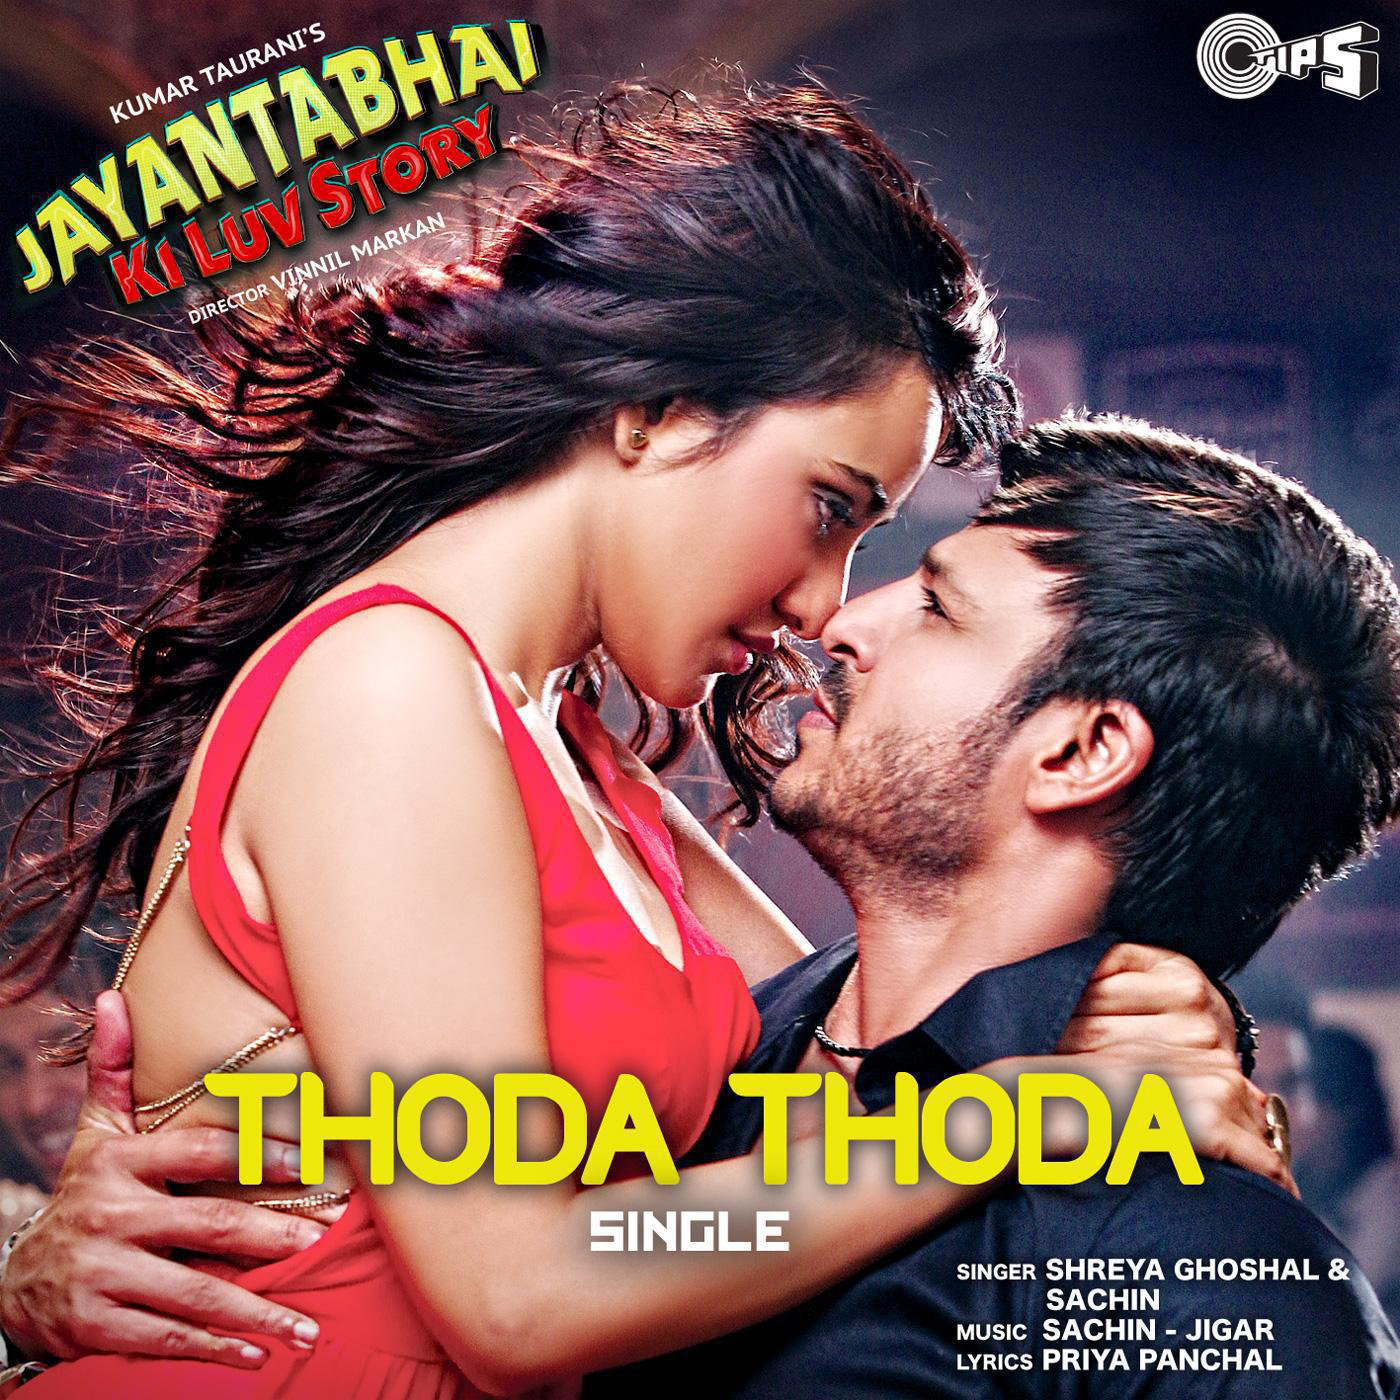 Thoda Thoda From "Jayantabhai Ki Luv Story" - Single.